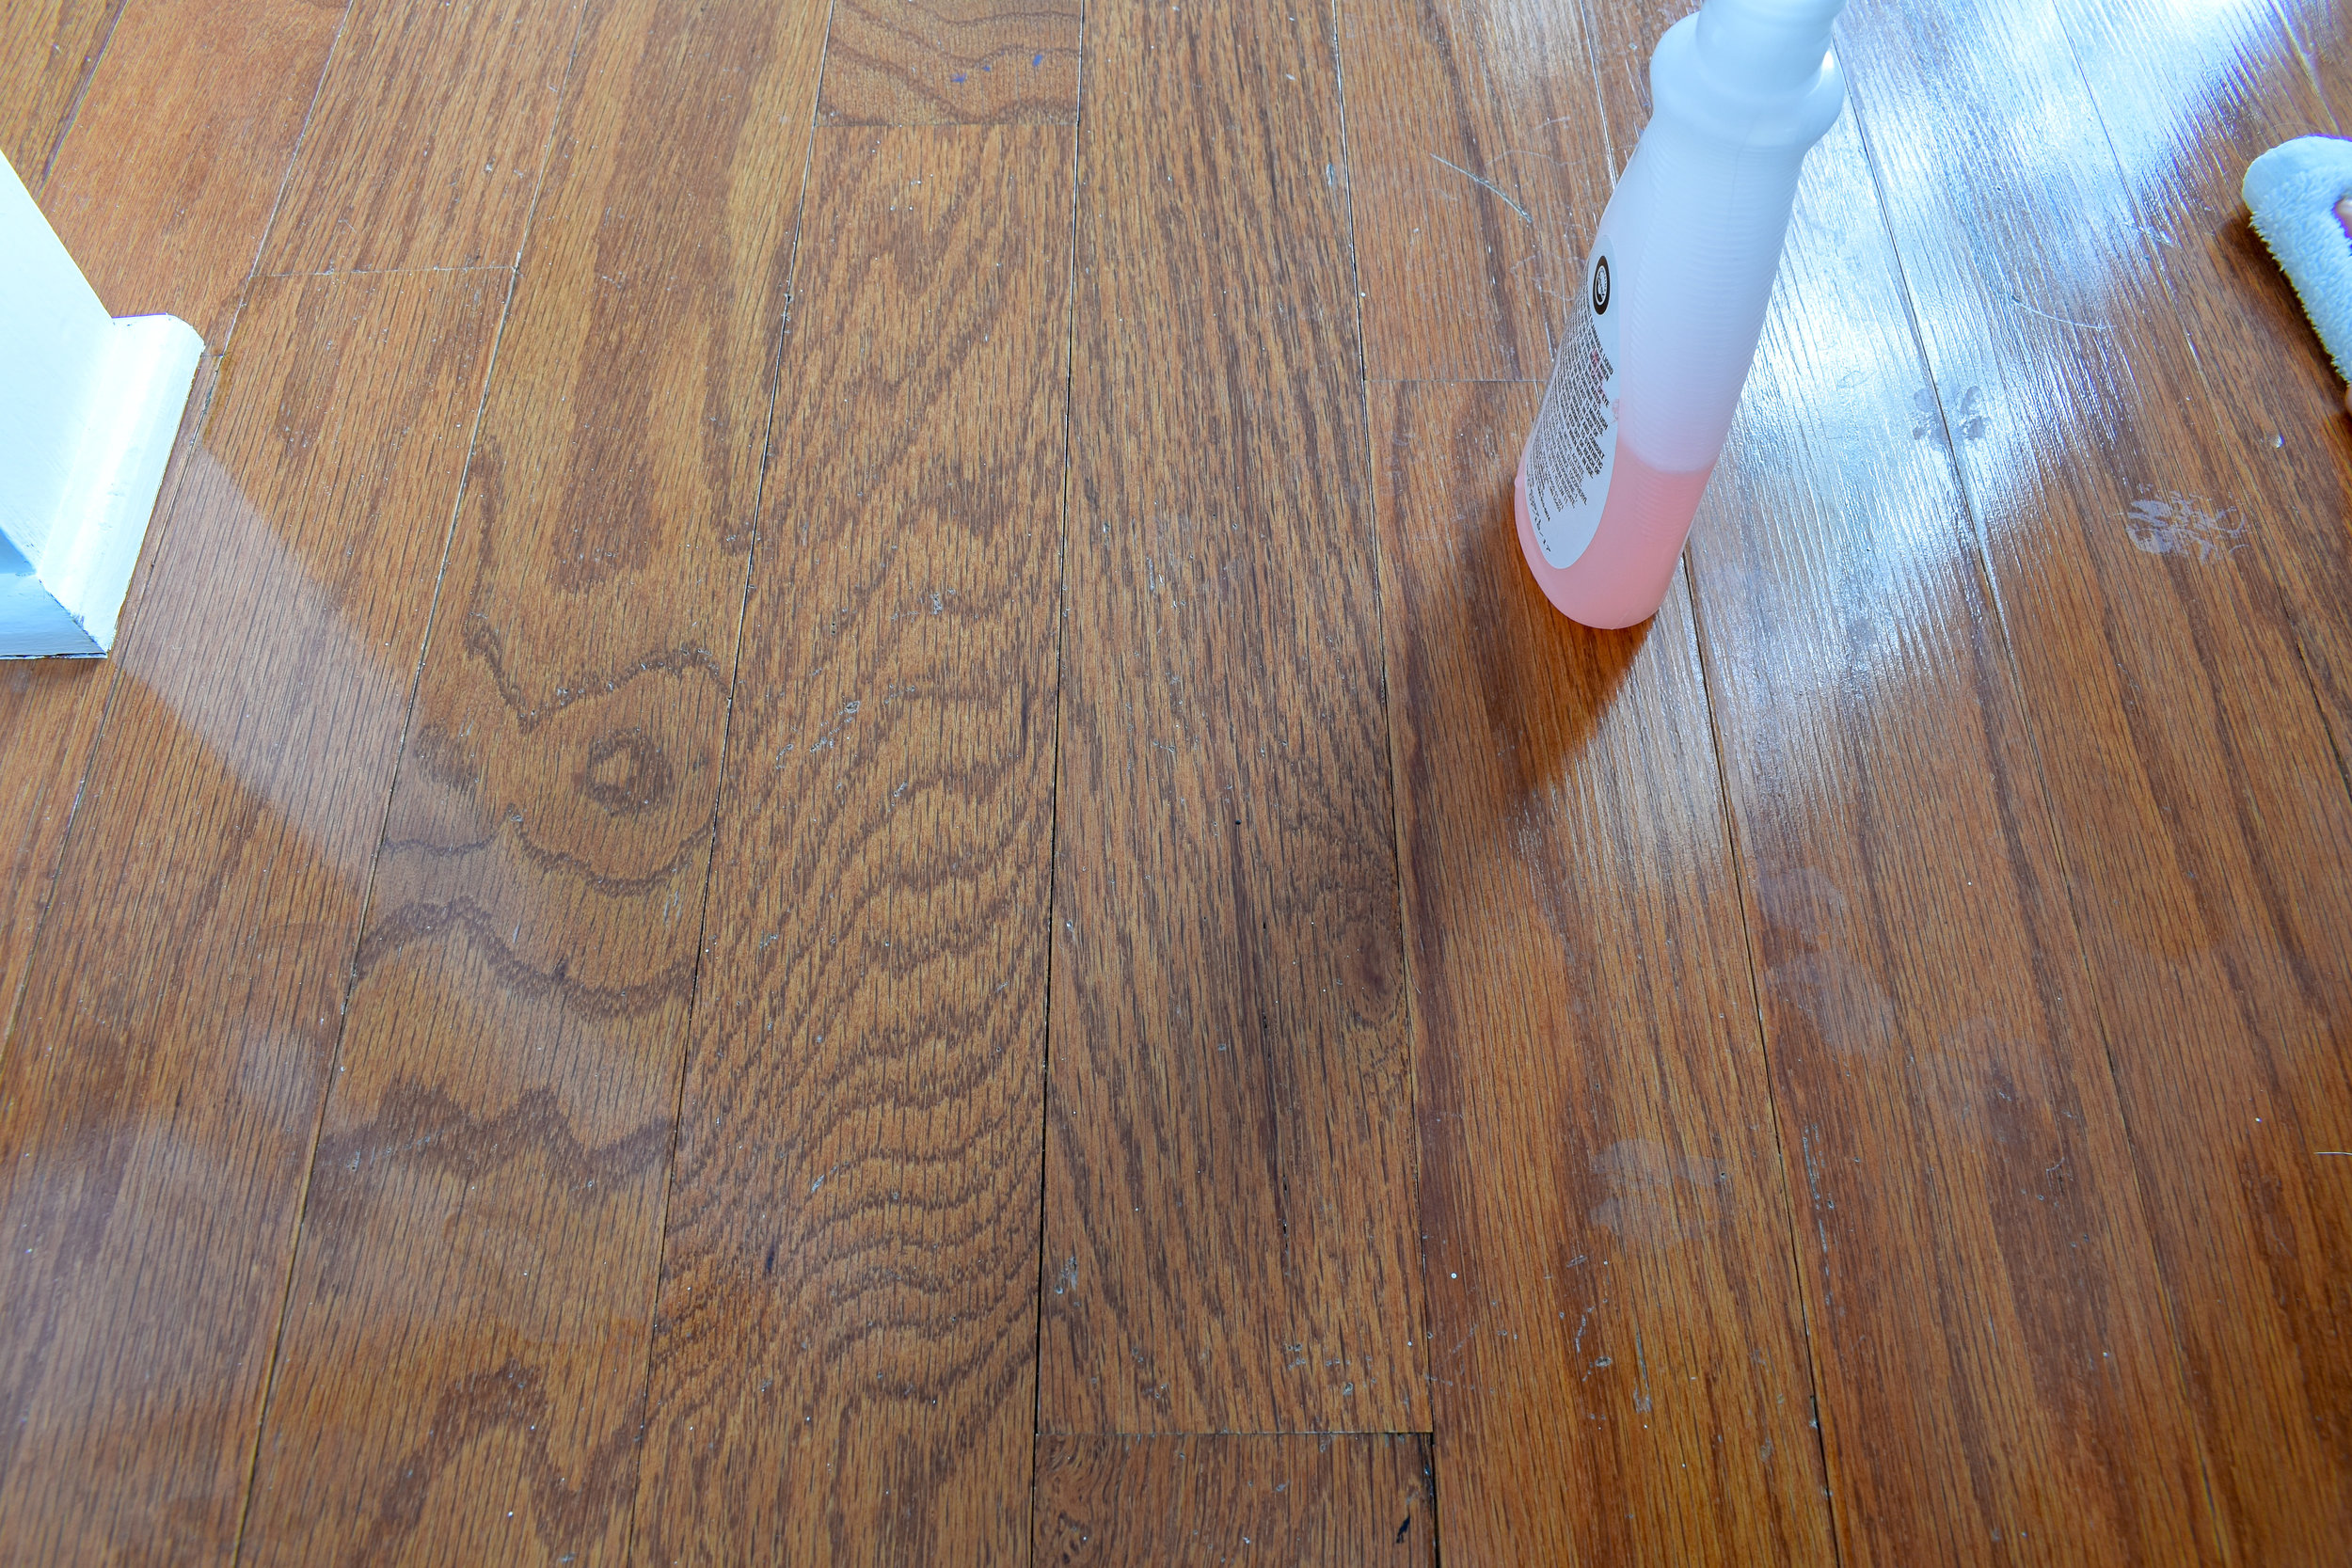 How To Make Old Hardwood Floors Shine, Hardwood Floors Too Shiny